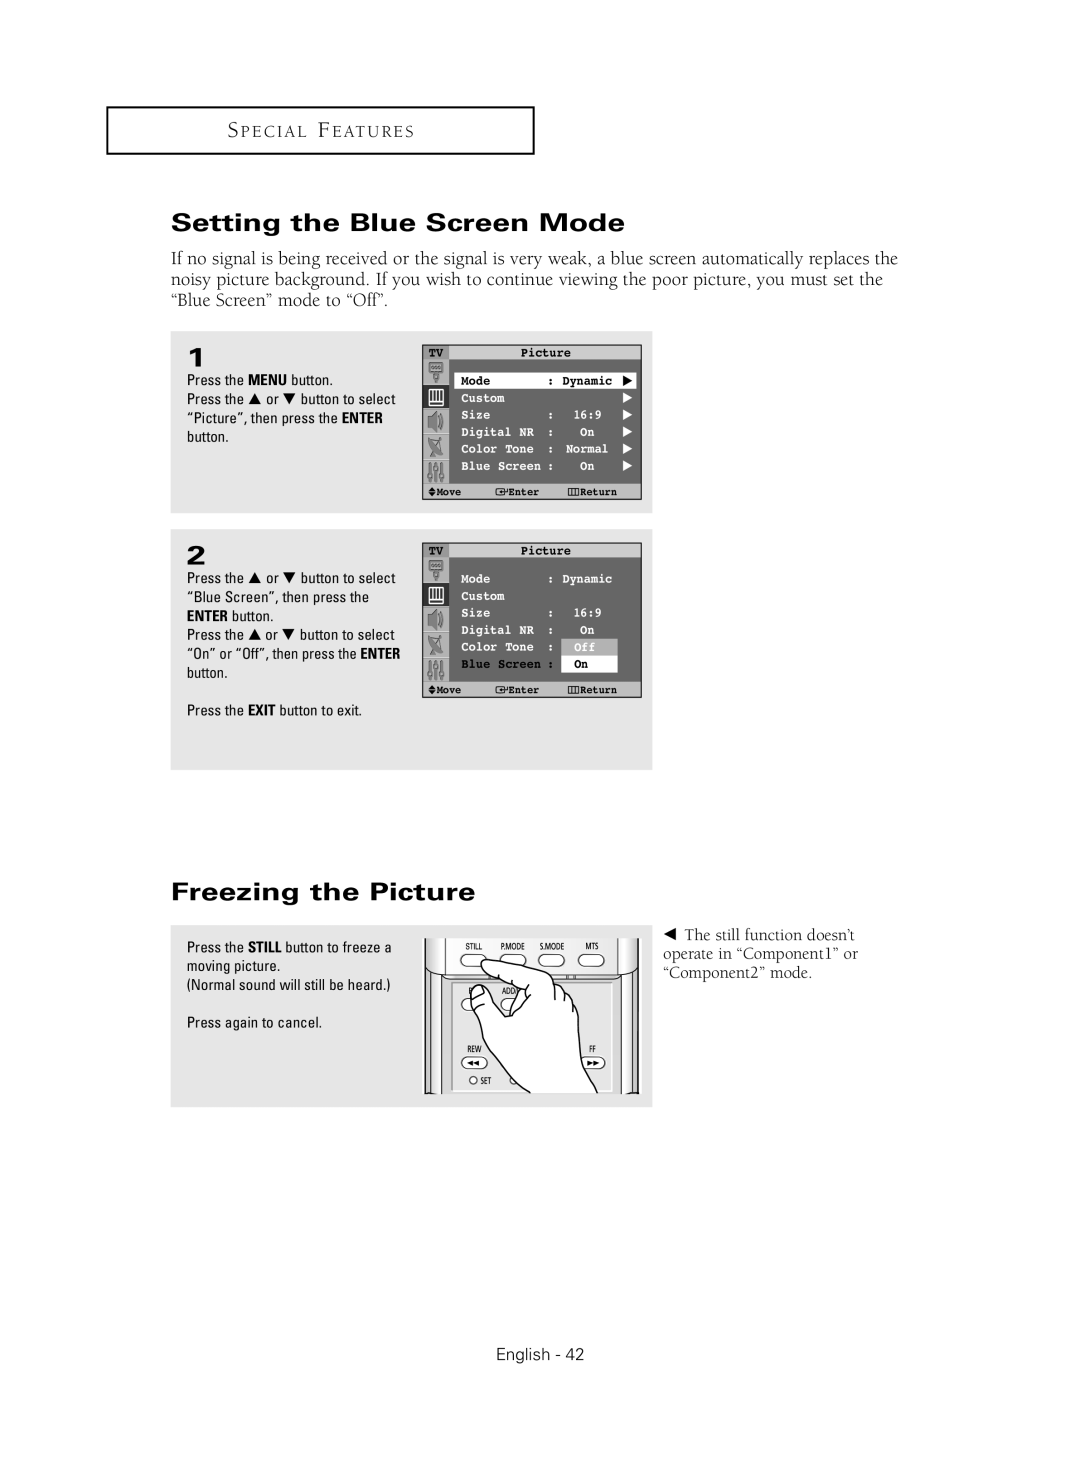 Samsung HC-P4241W manual Setting the Blue Screen Mode, Freezing the Picture, S P E C I A L F E At U R E S, English, button 